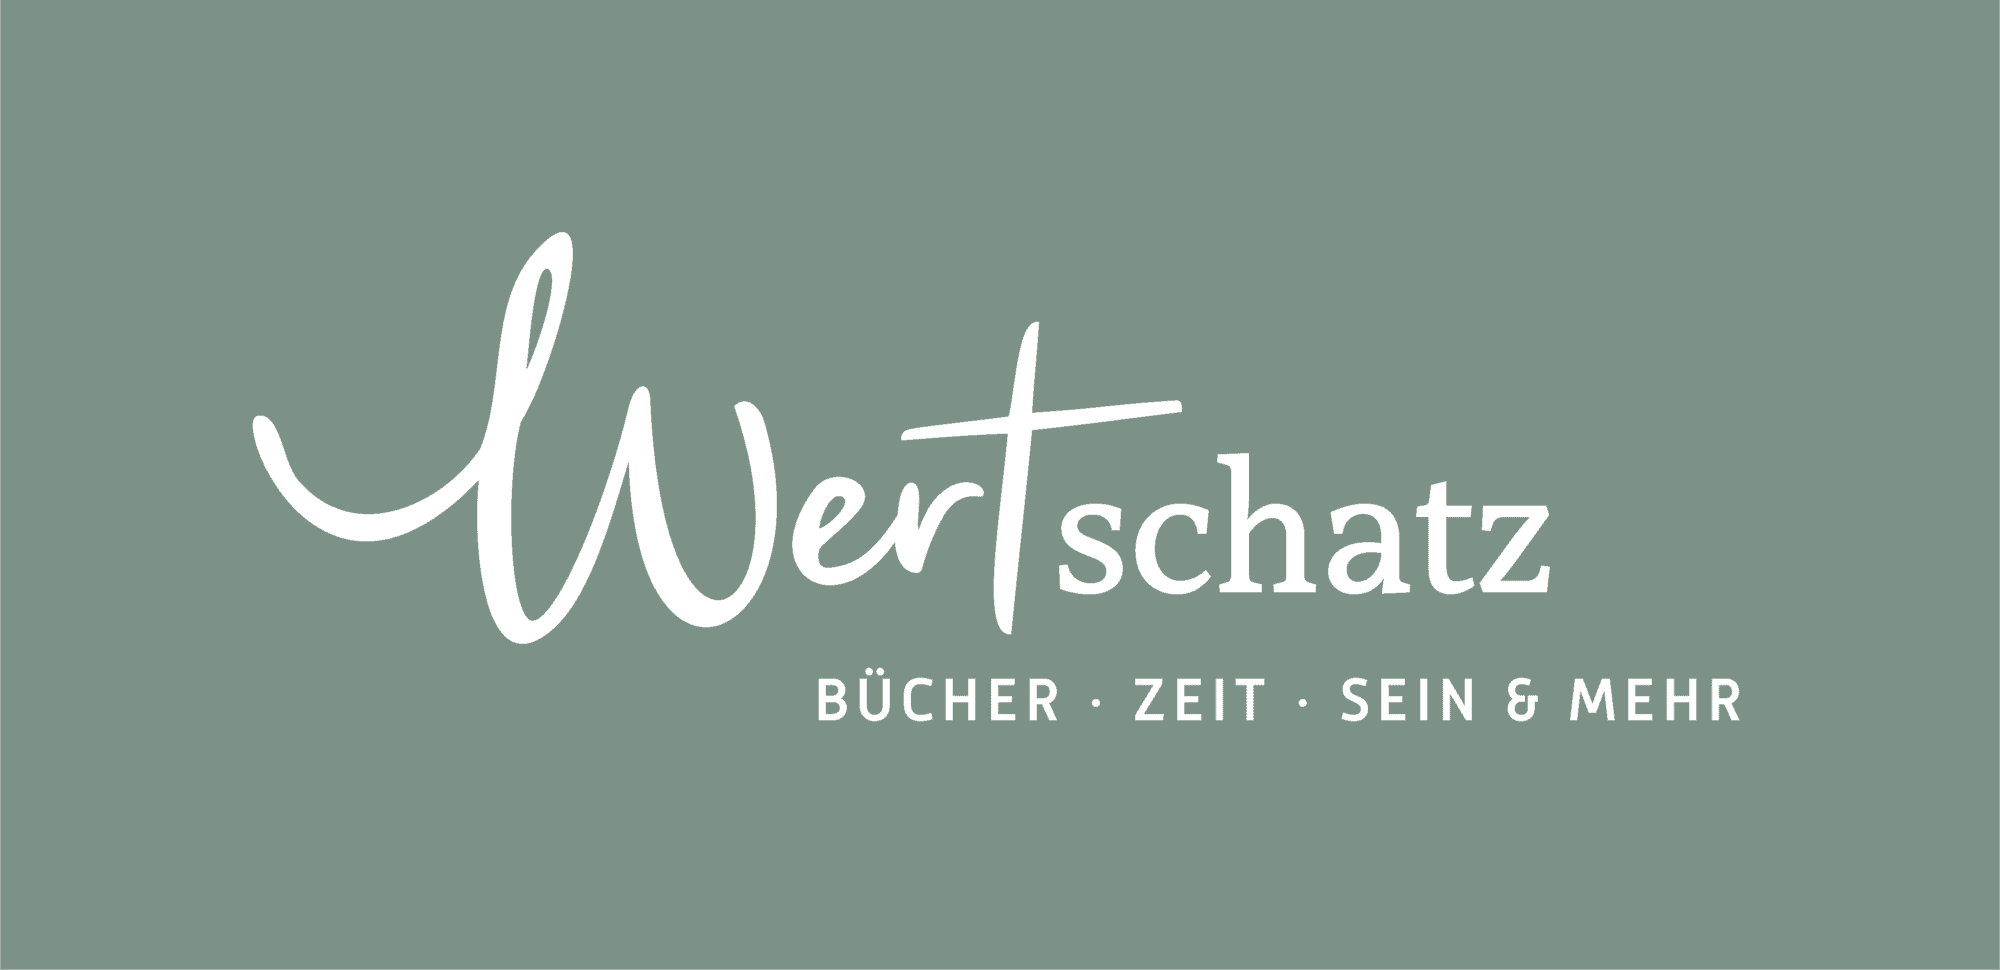 (c) Wert-schatz.ch